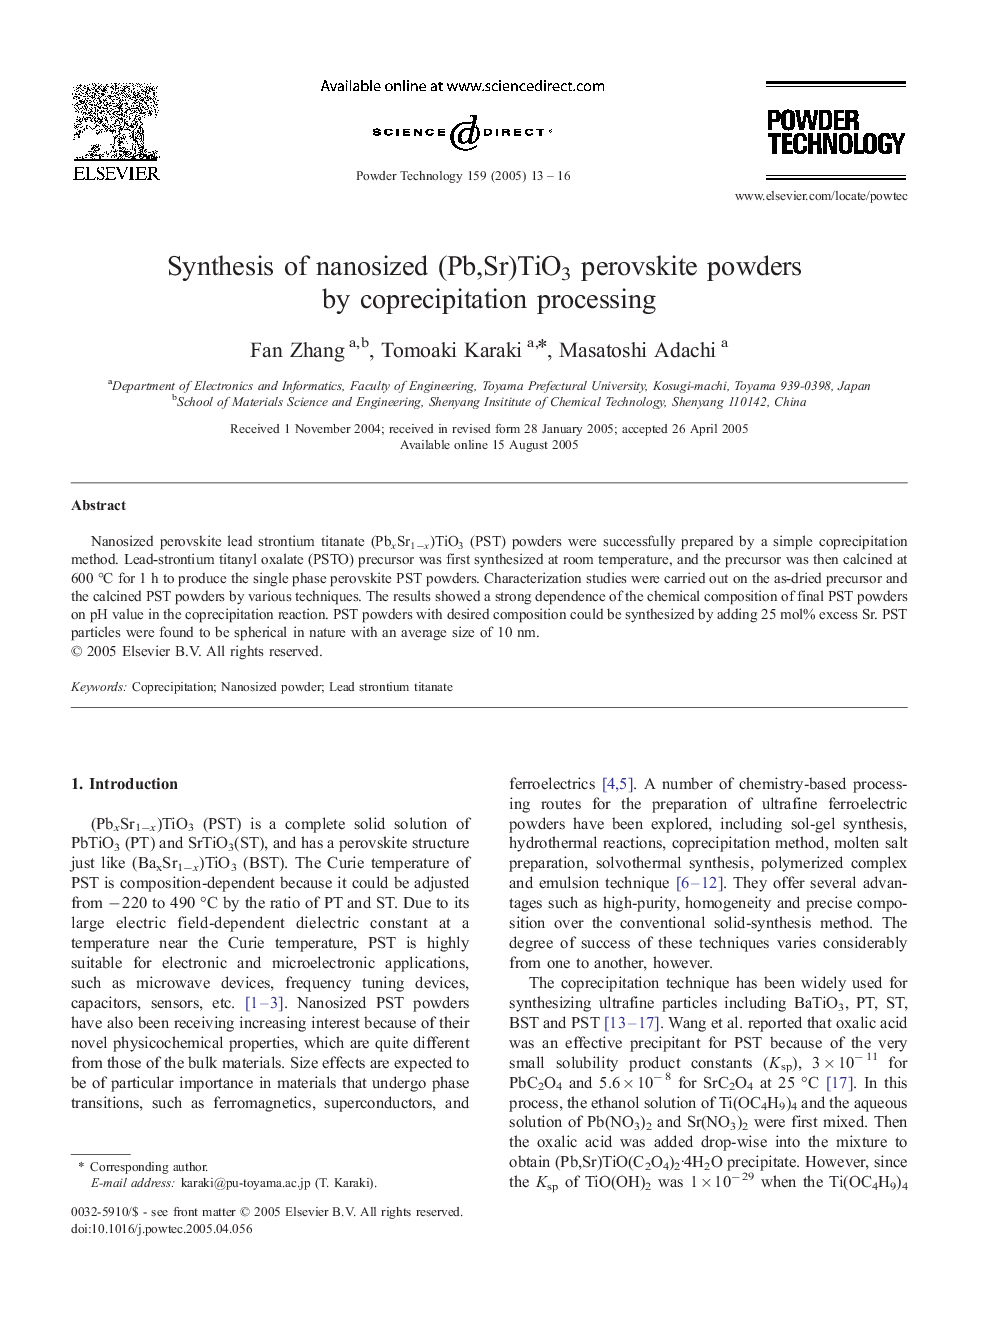 Synthesis of nanosized (Pb,Sr)TiO3 perovskite powders by coprecipitation processing